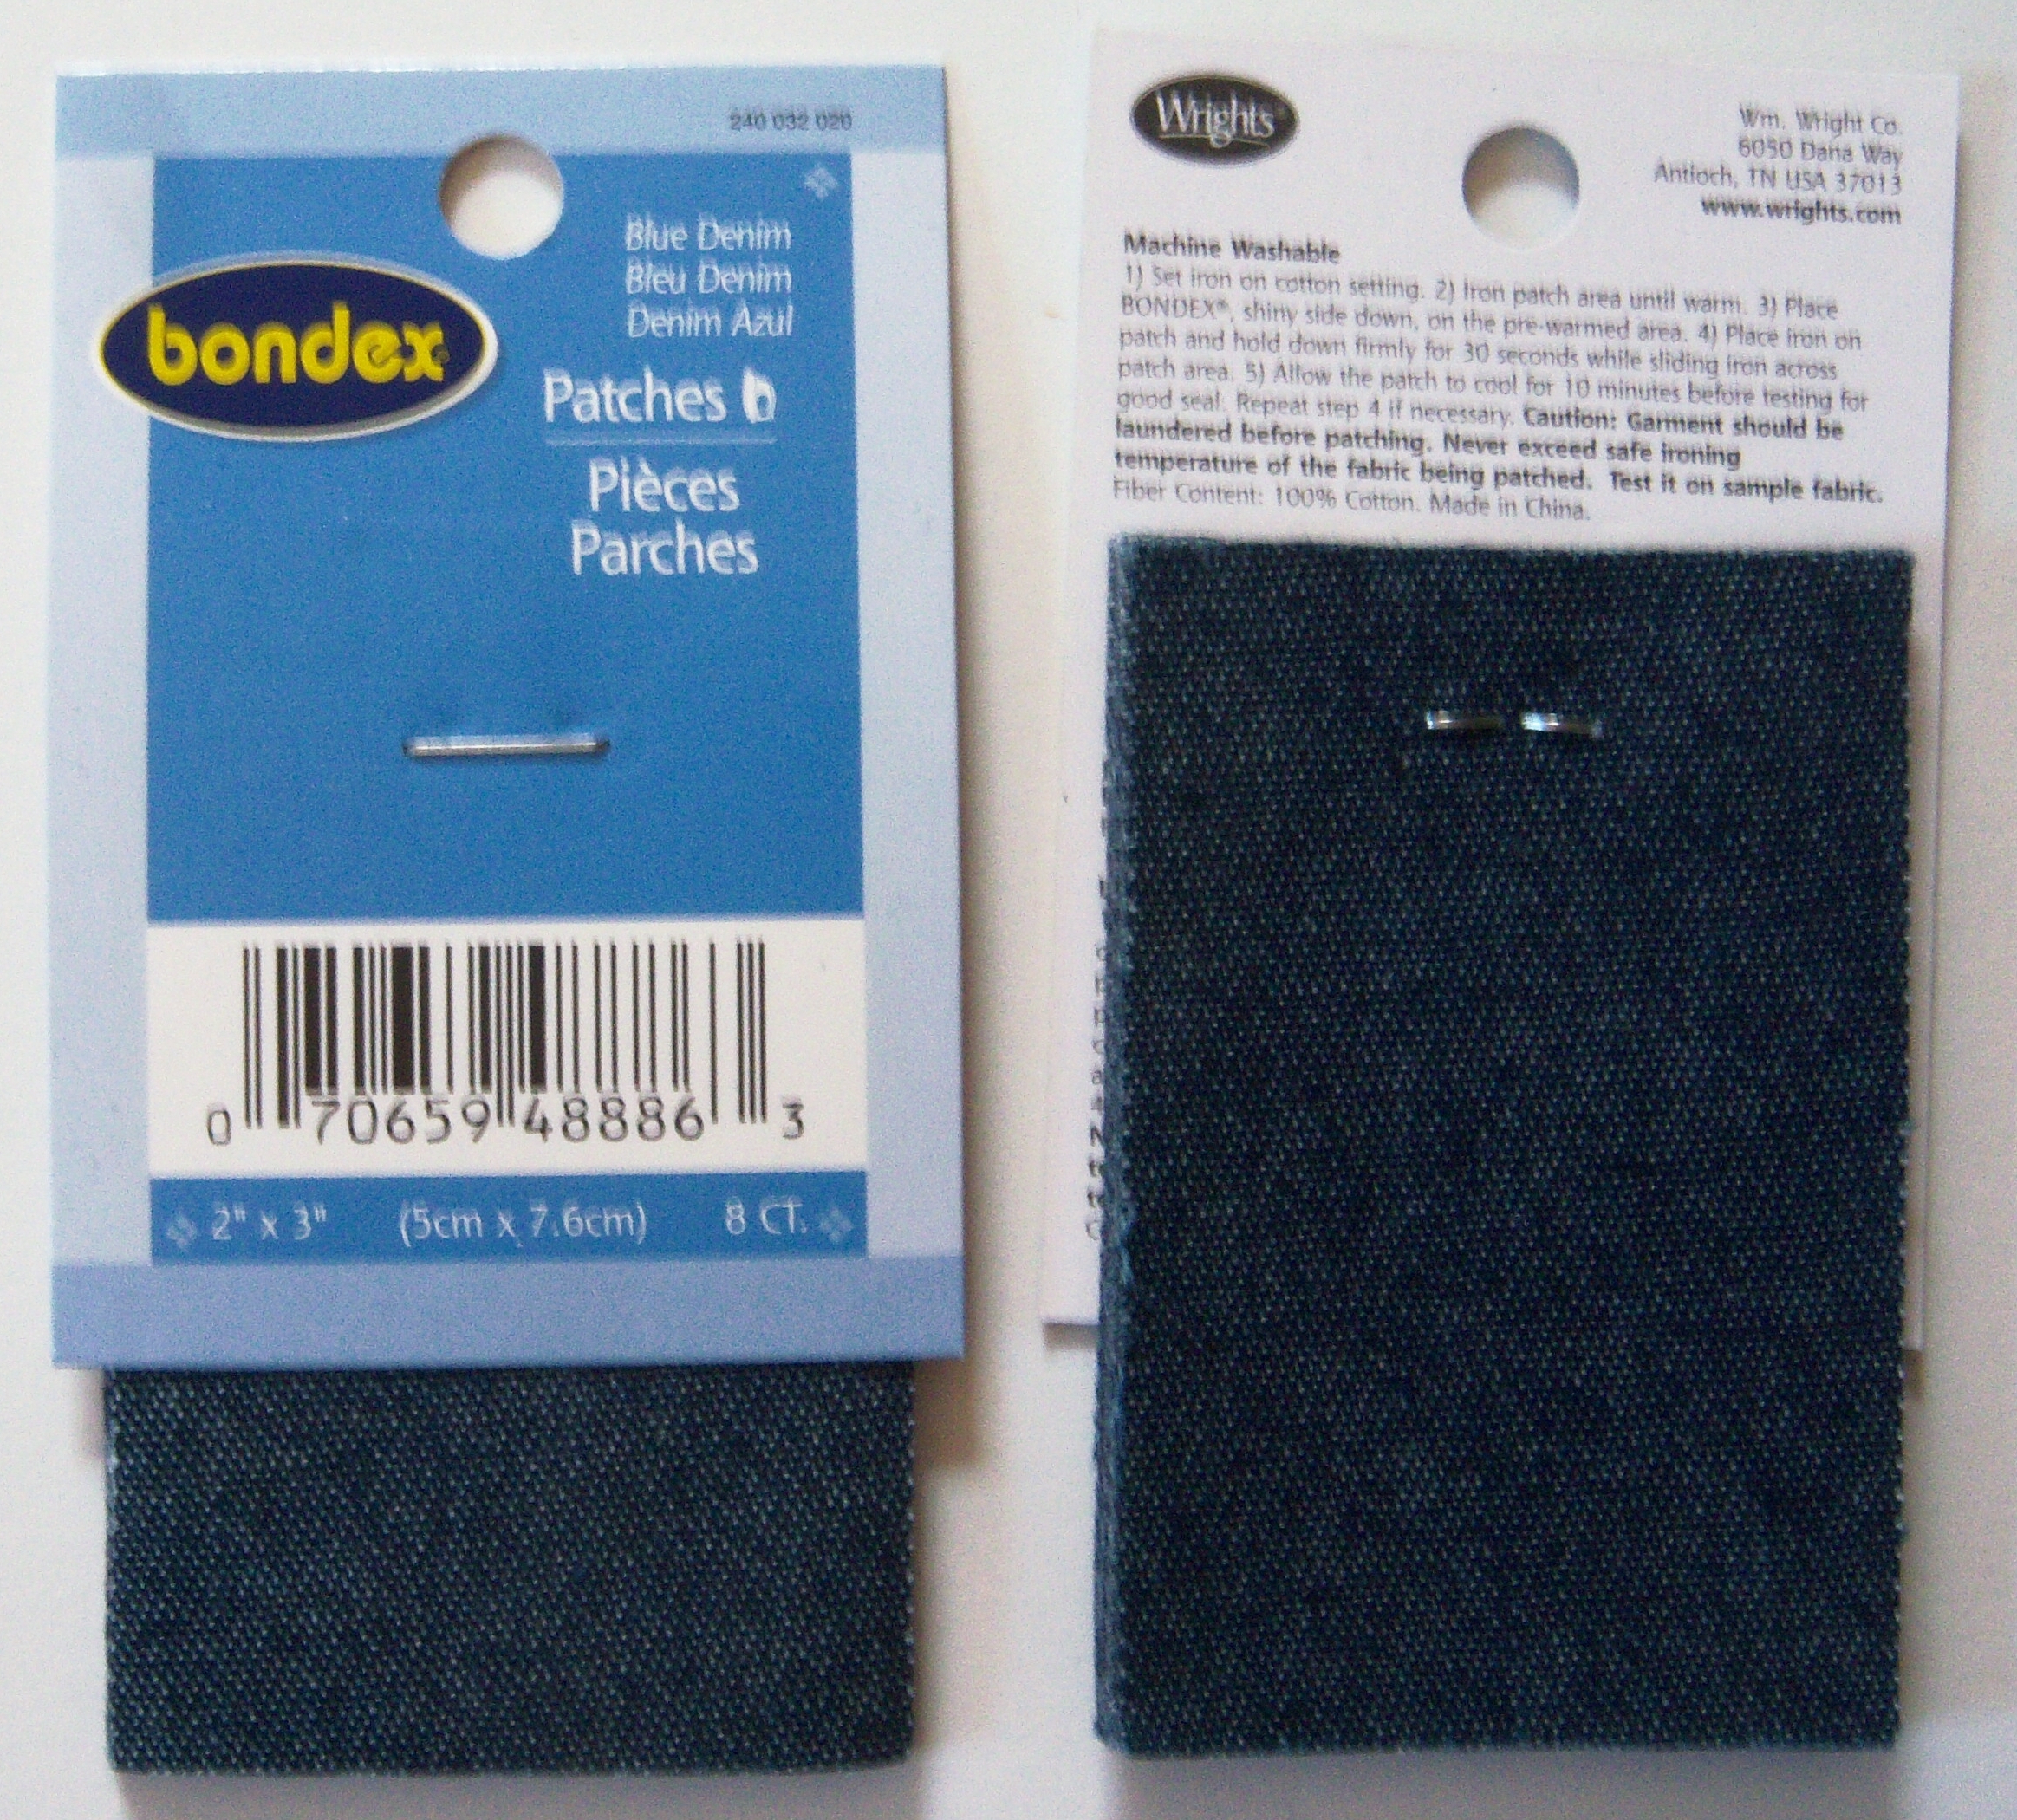 Bondex 8 Blue Denim Iron On Patches